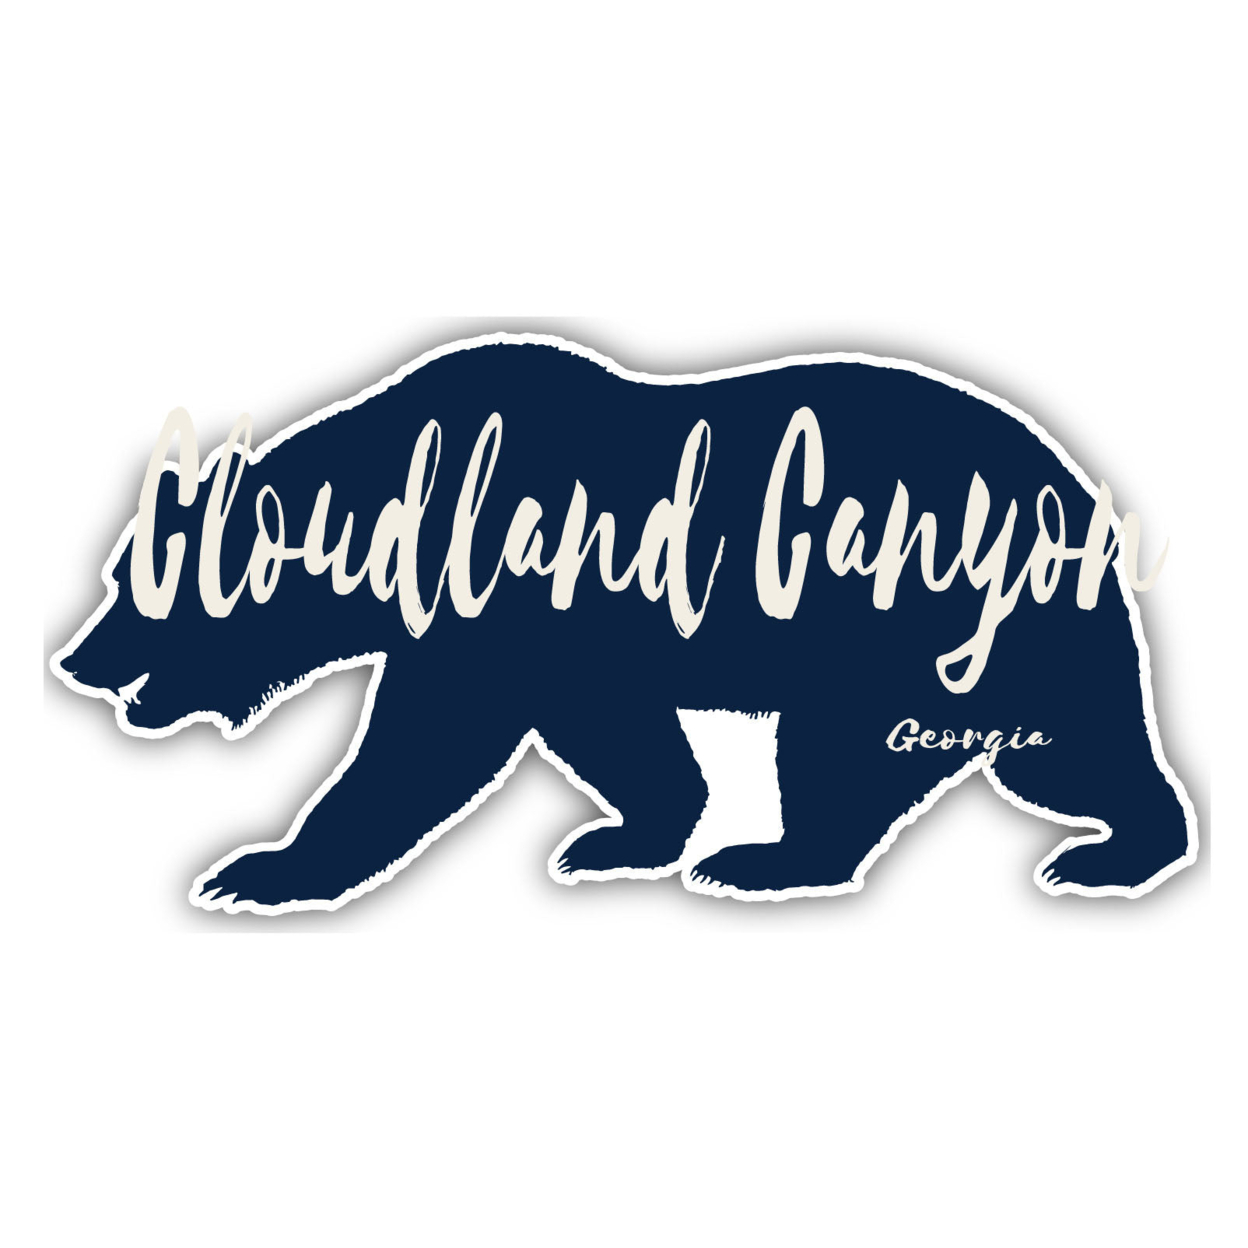 Cloudland Canyon Georgia Souvenir Decorative Stickers (Choose Theme And Size) - 4-Pack, 12-Inch, Bear